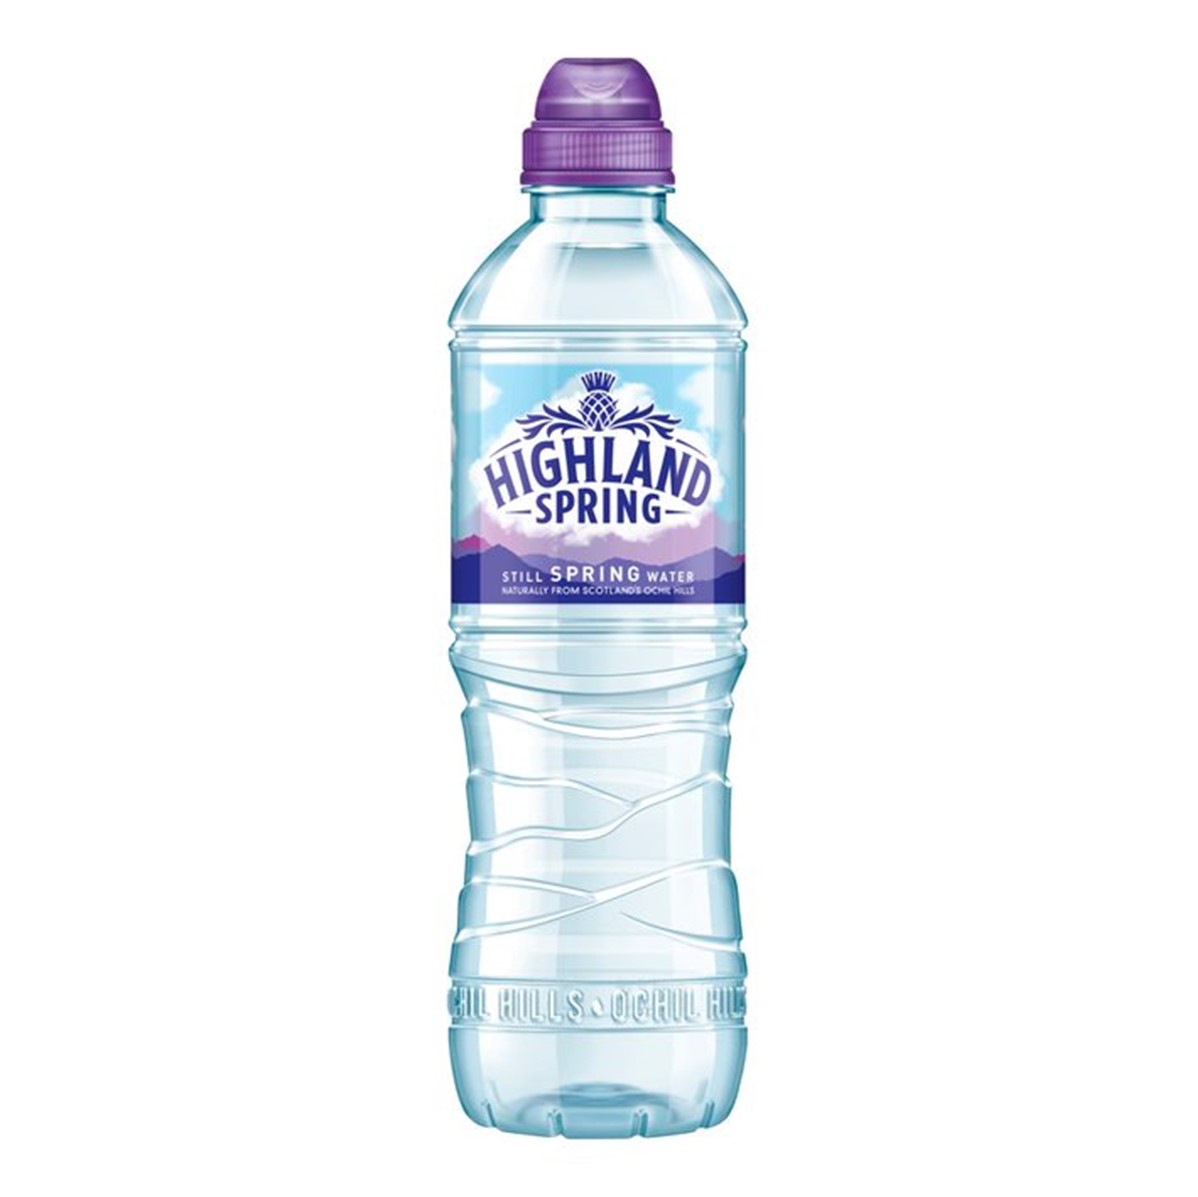 Highland Spring Still Water - 24x500ml sports cap bottles